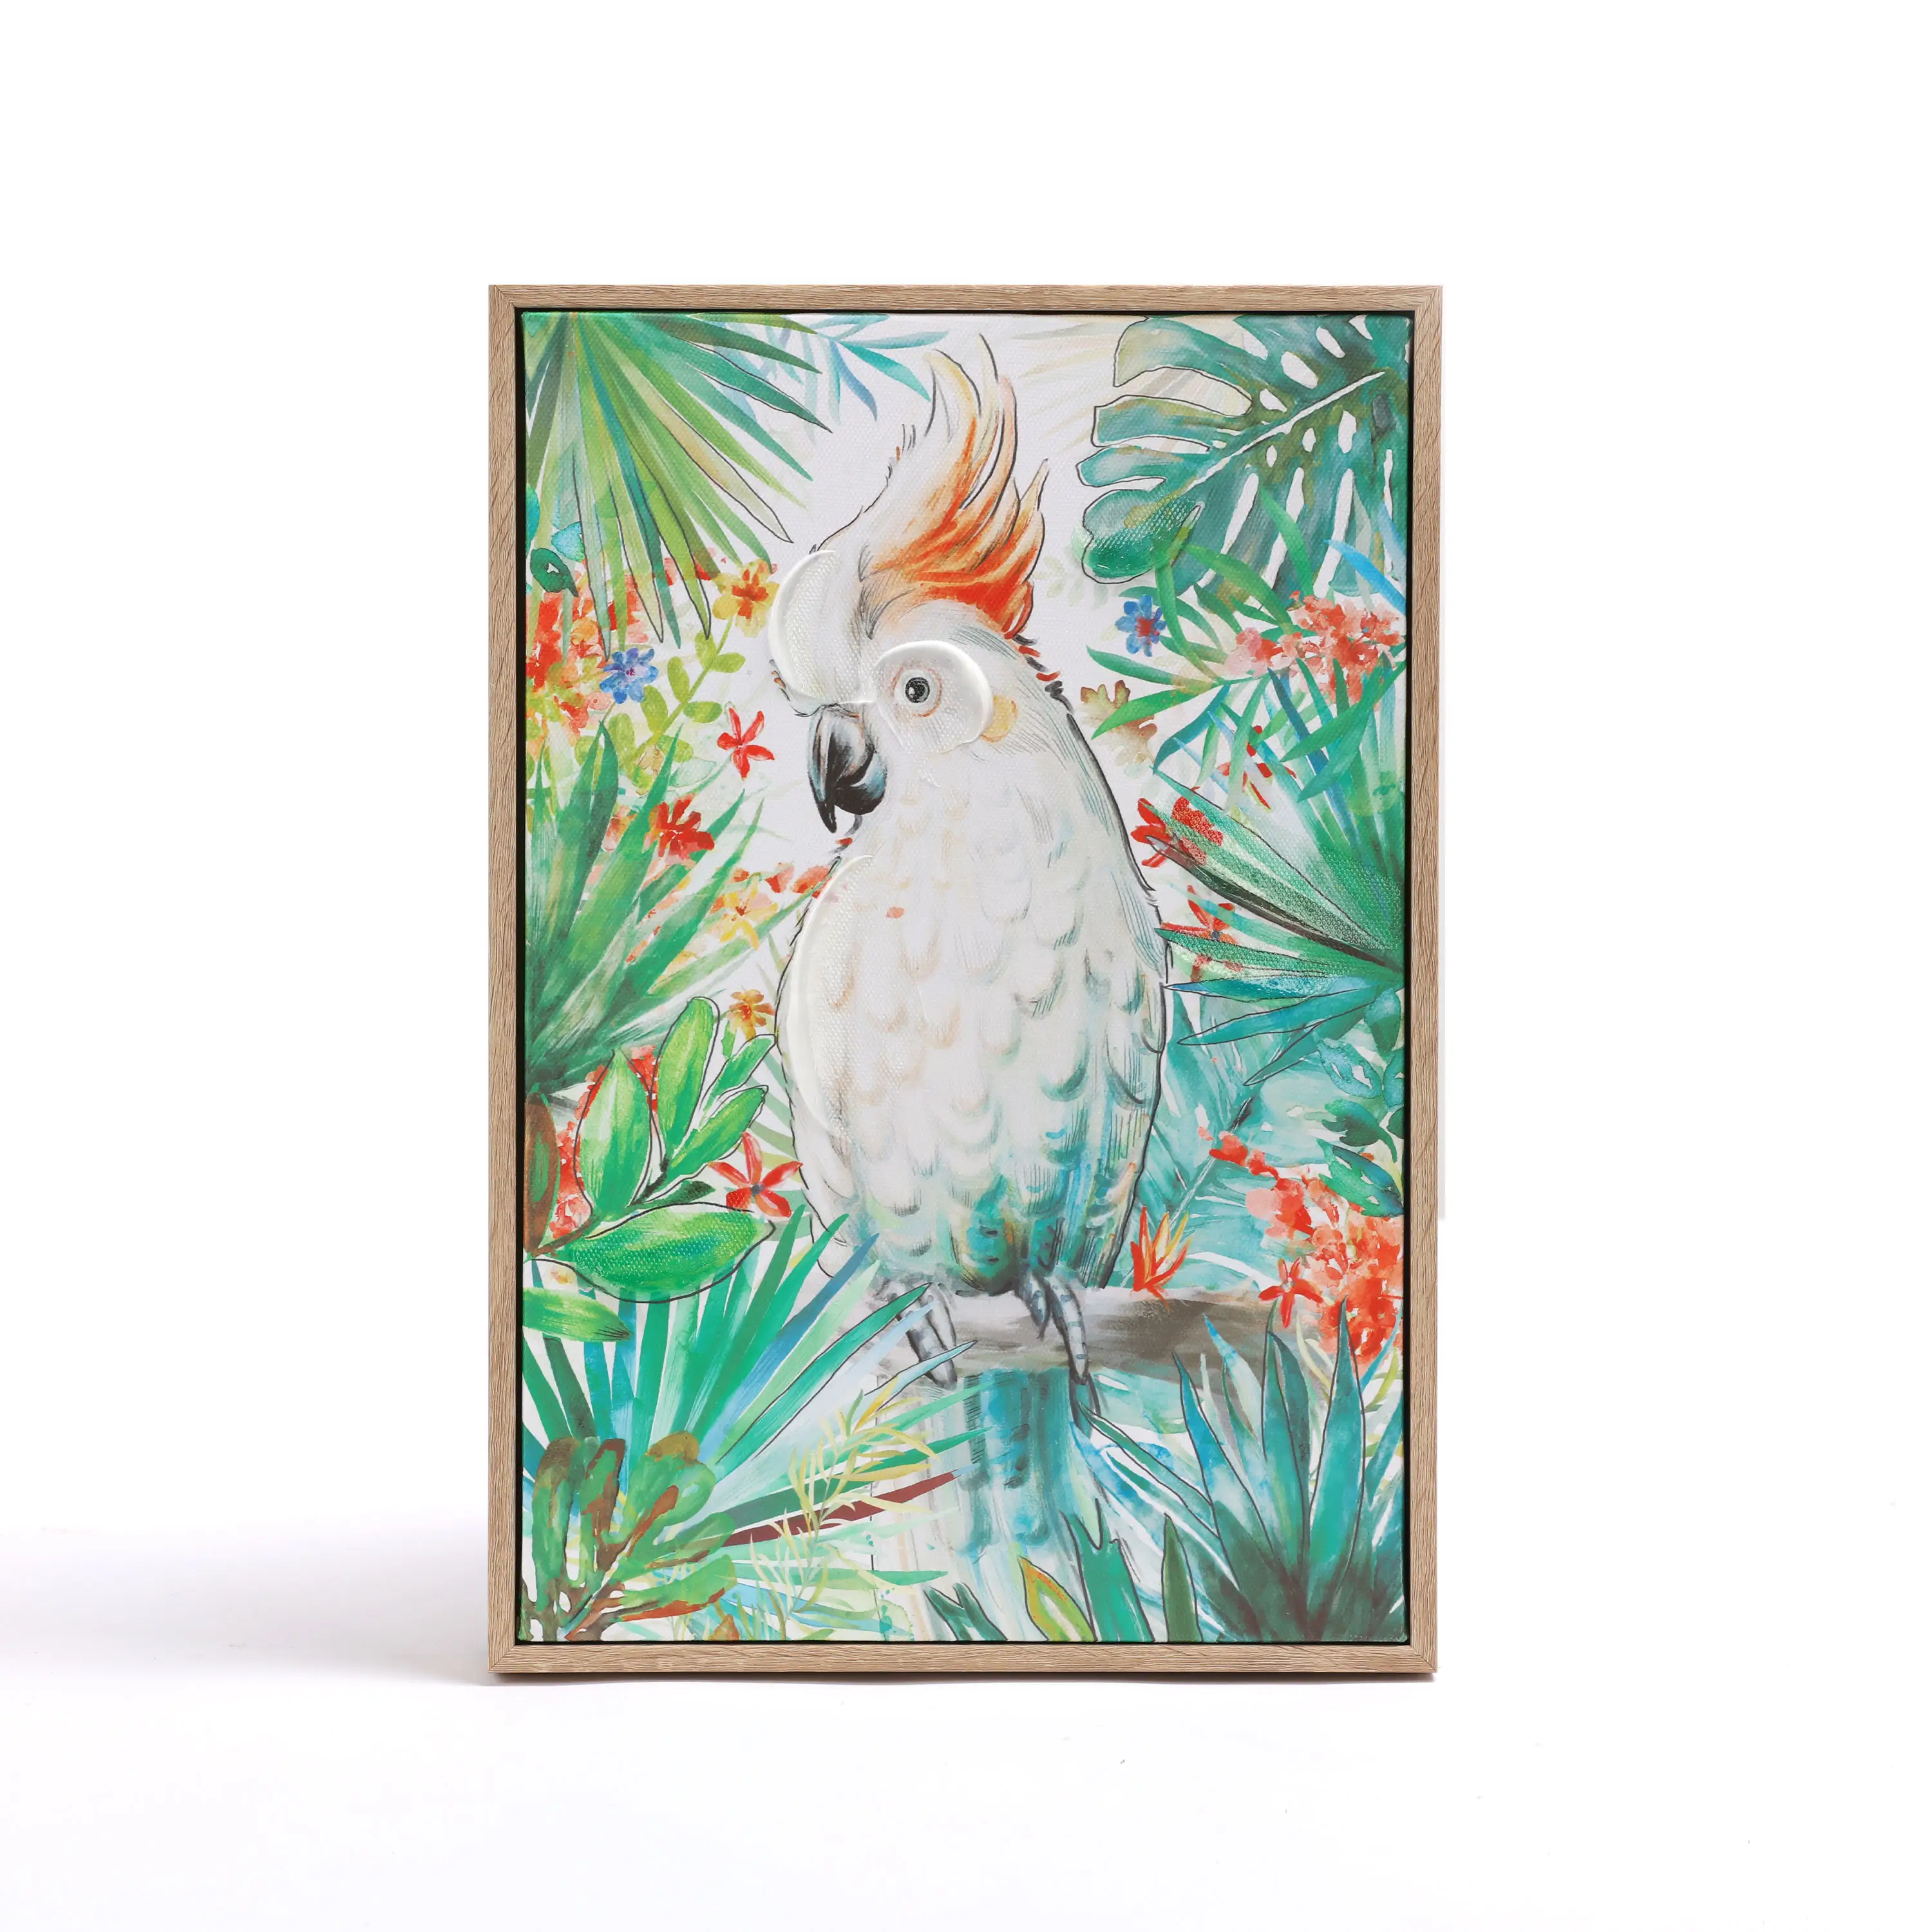 High quality decorative wooden framed modern cartoon green plants flowers animal white parrot bird wall art canvas picture print